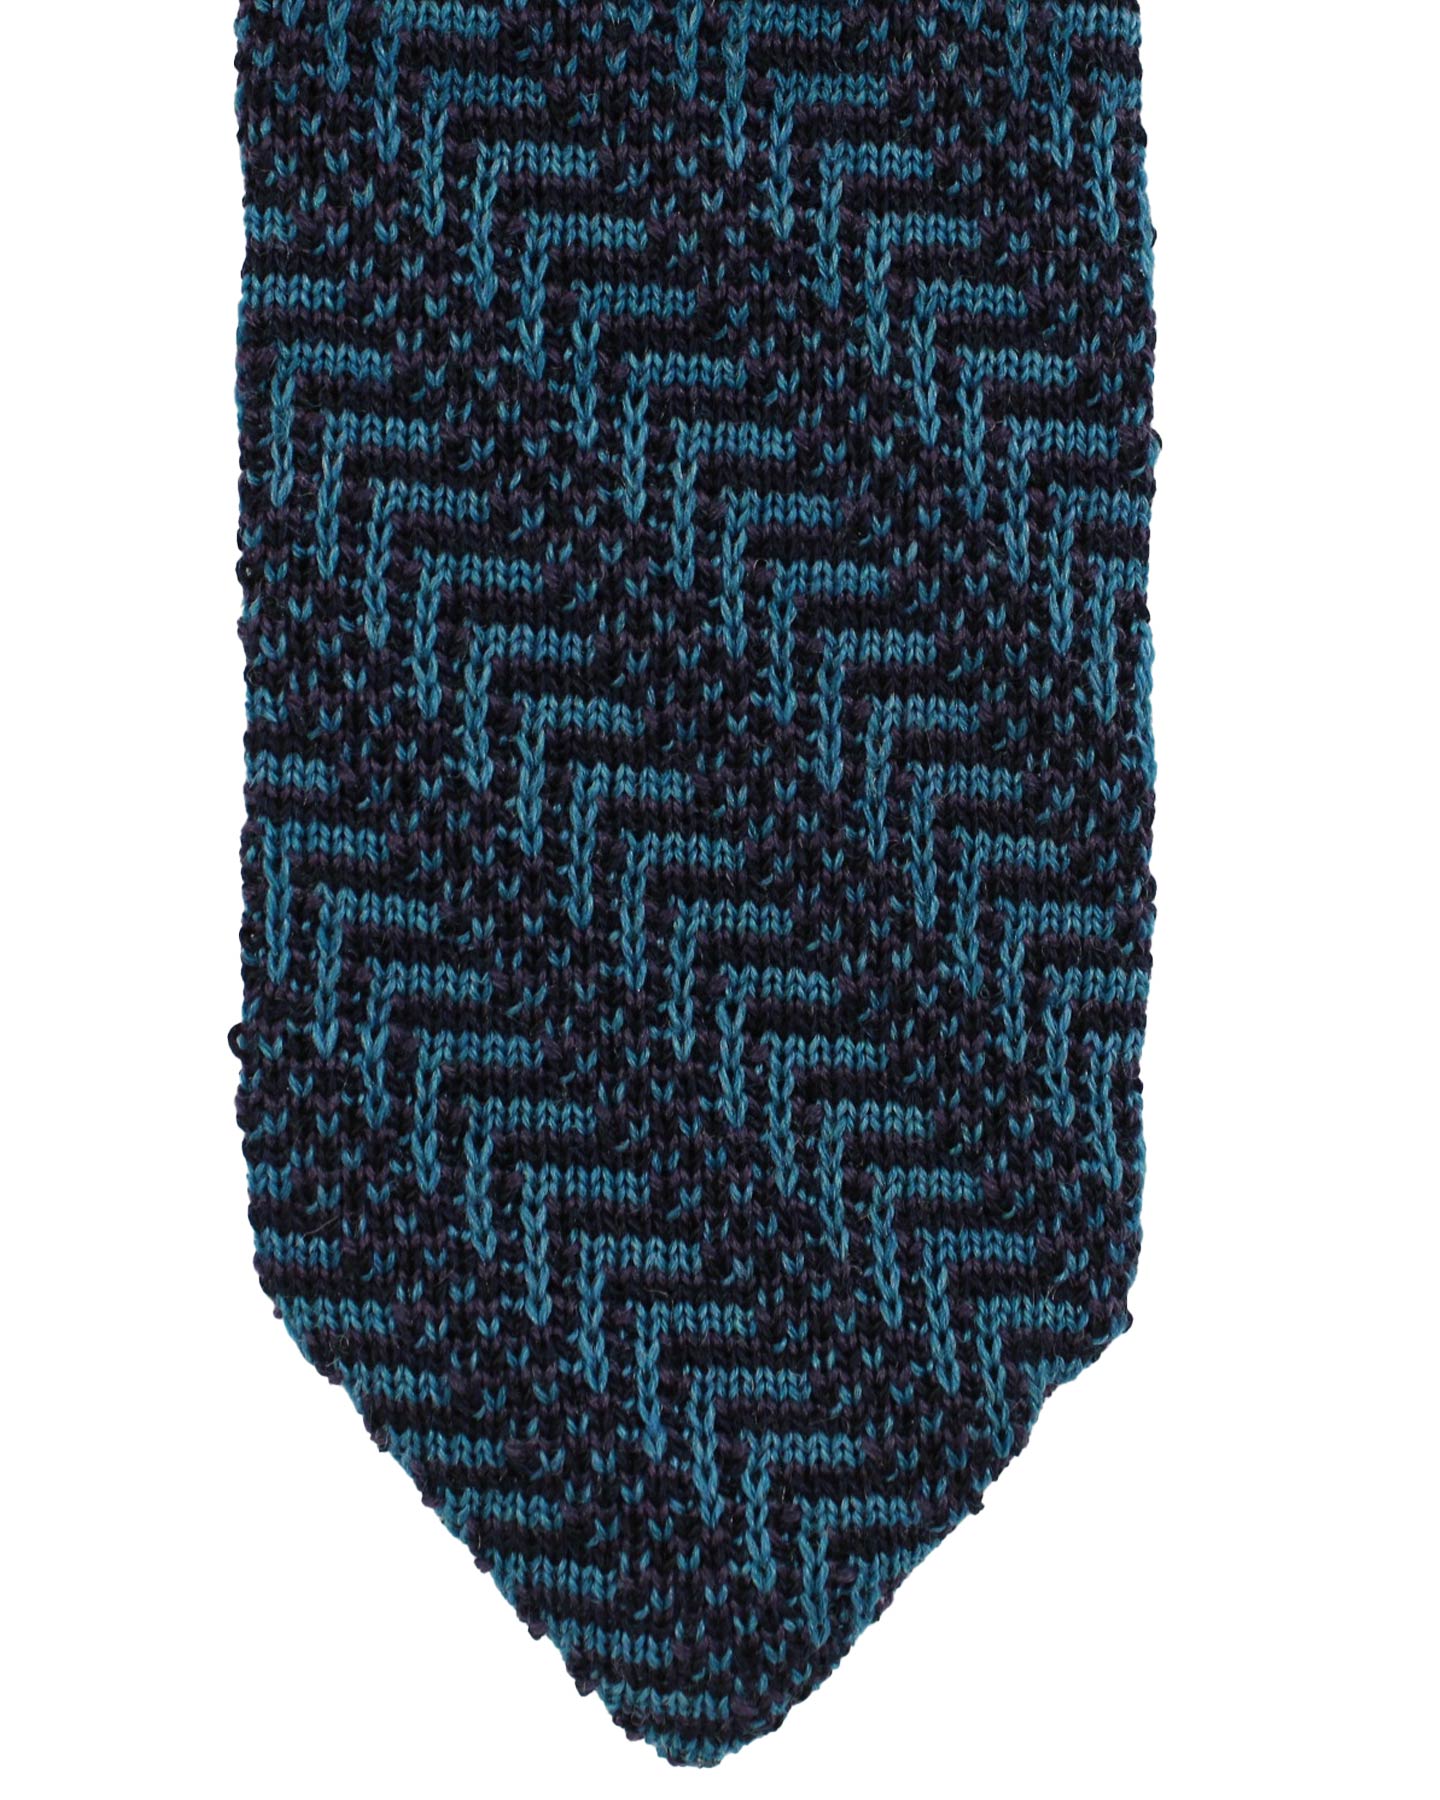 Missoni Knitted Tie Blue Black Wool Silk